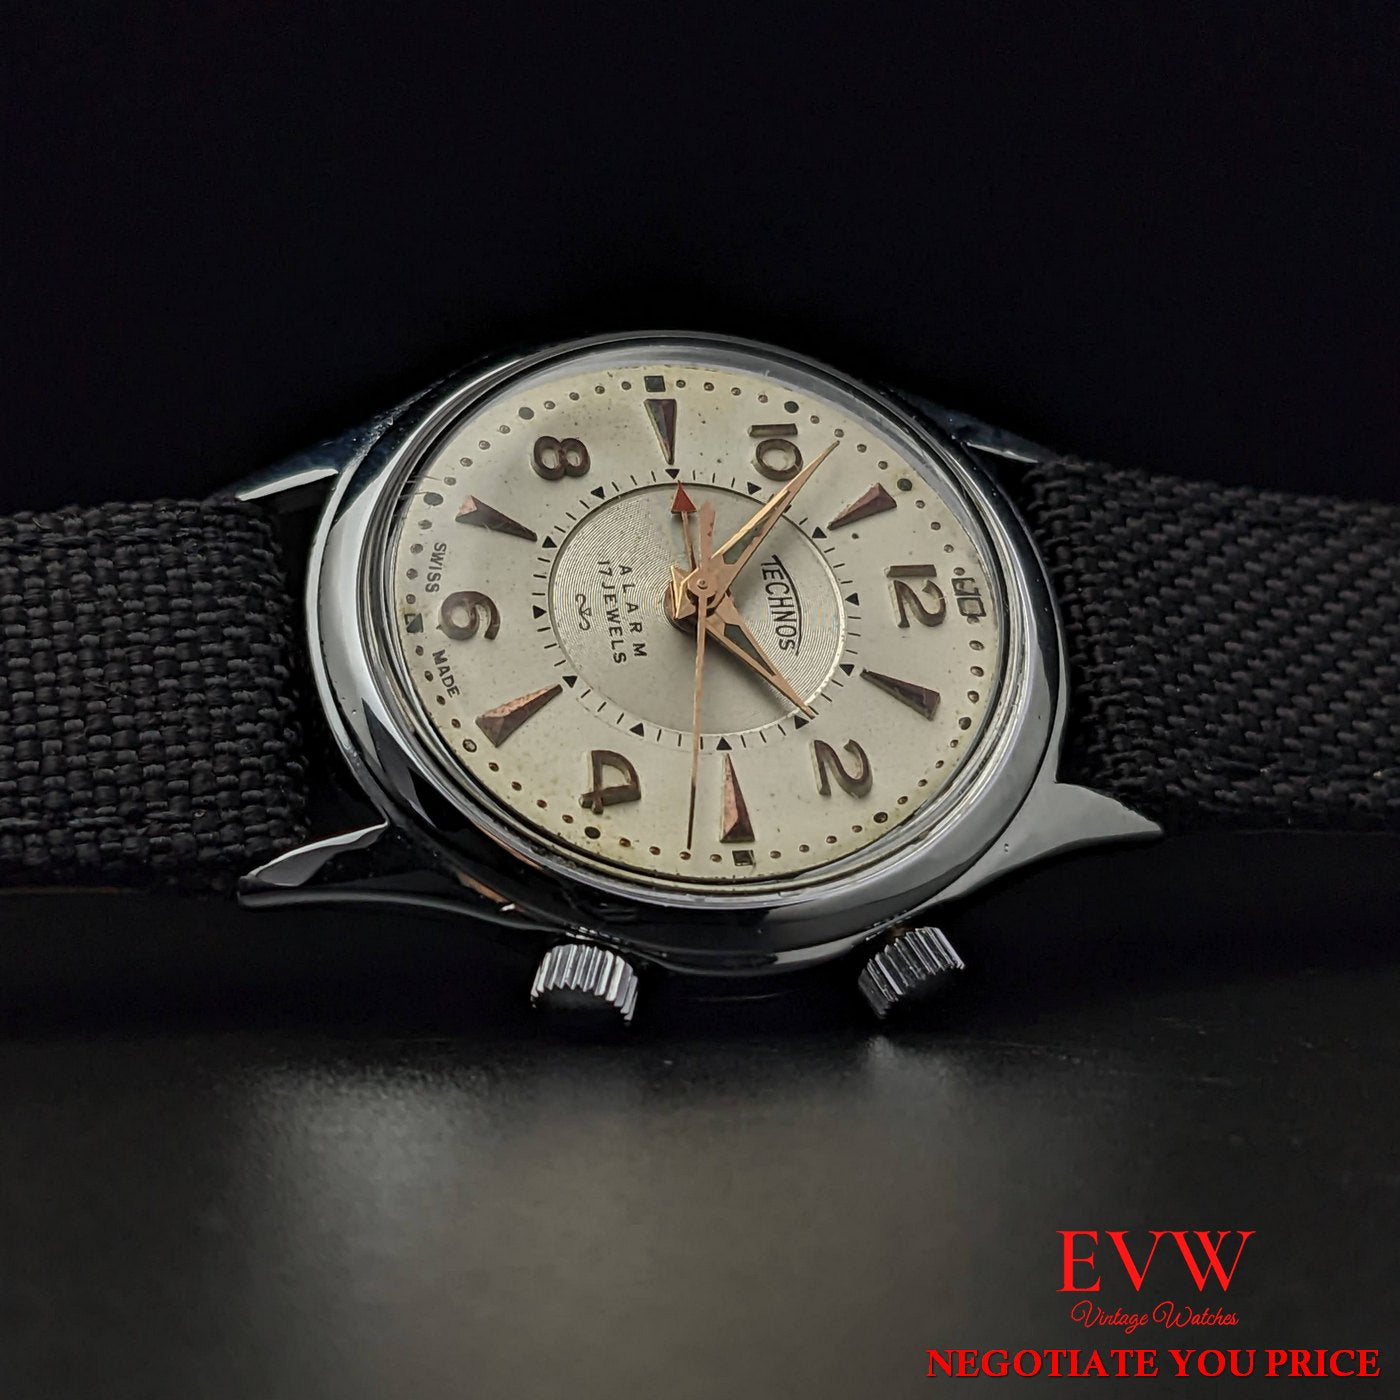 TECHNOS TSM401 Chronograph Men's Wrist Watch | eBay